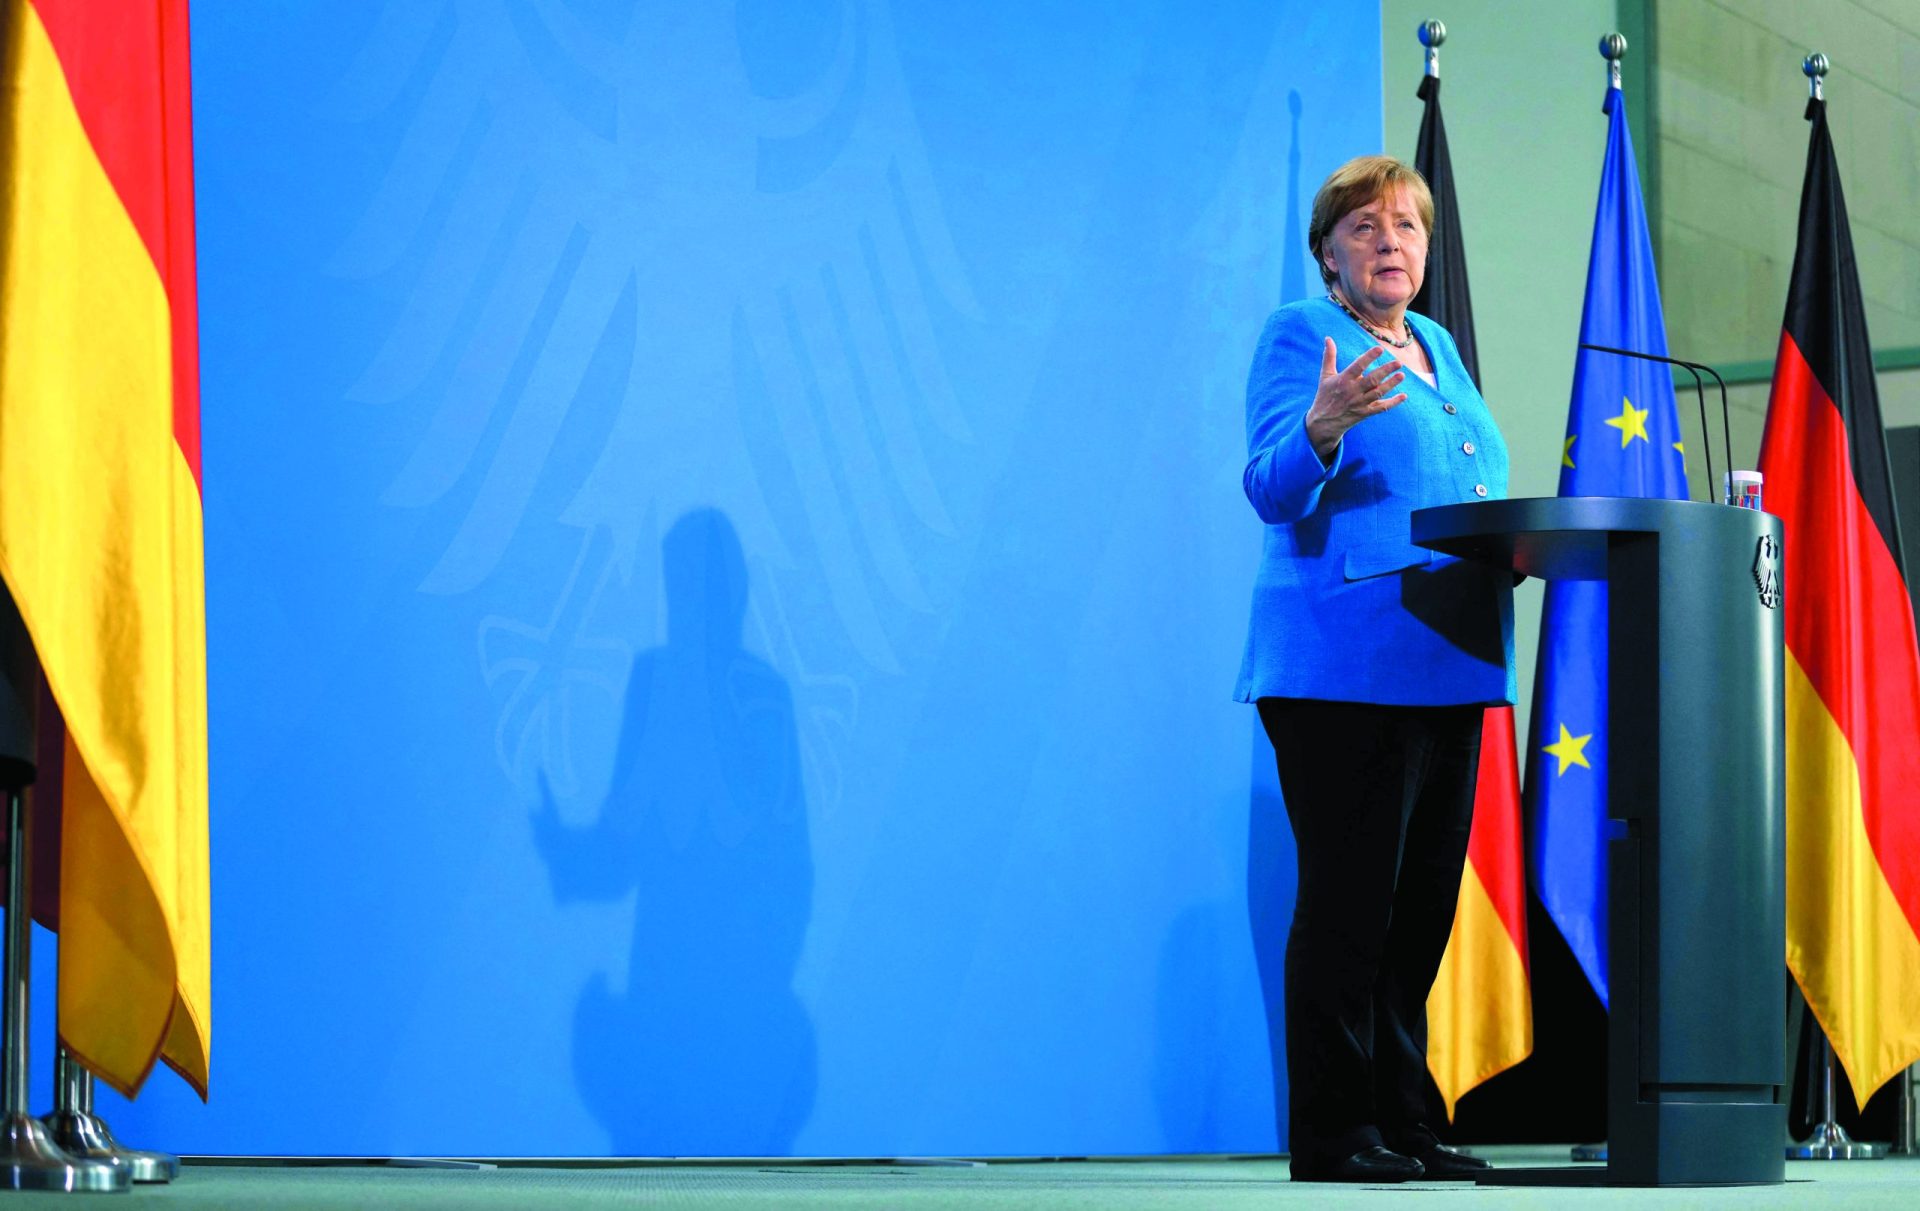 Merkel e Macron à conversa com Xi Jinping e Biden a olhar